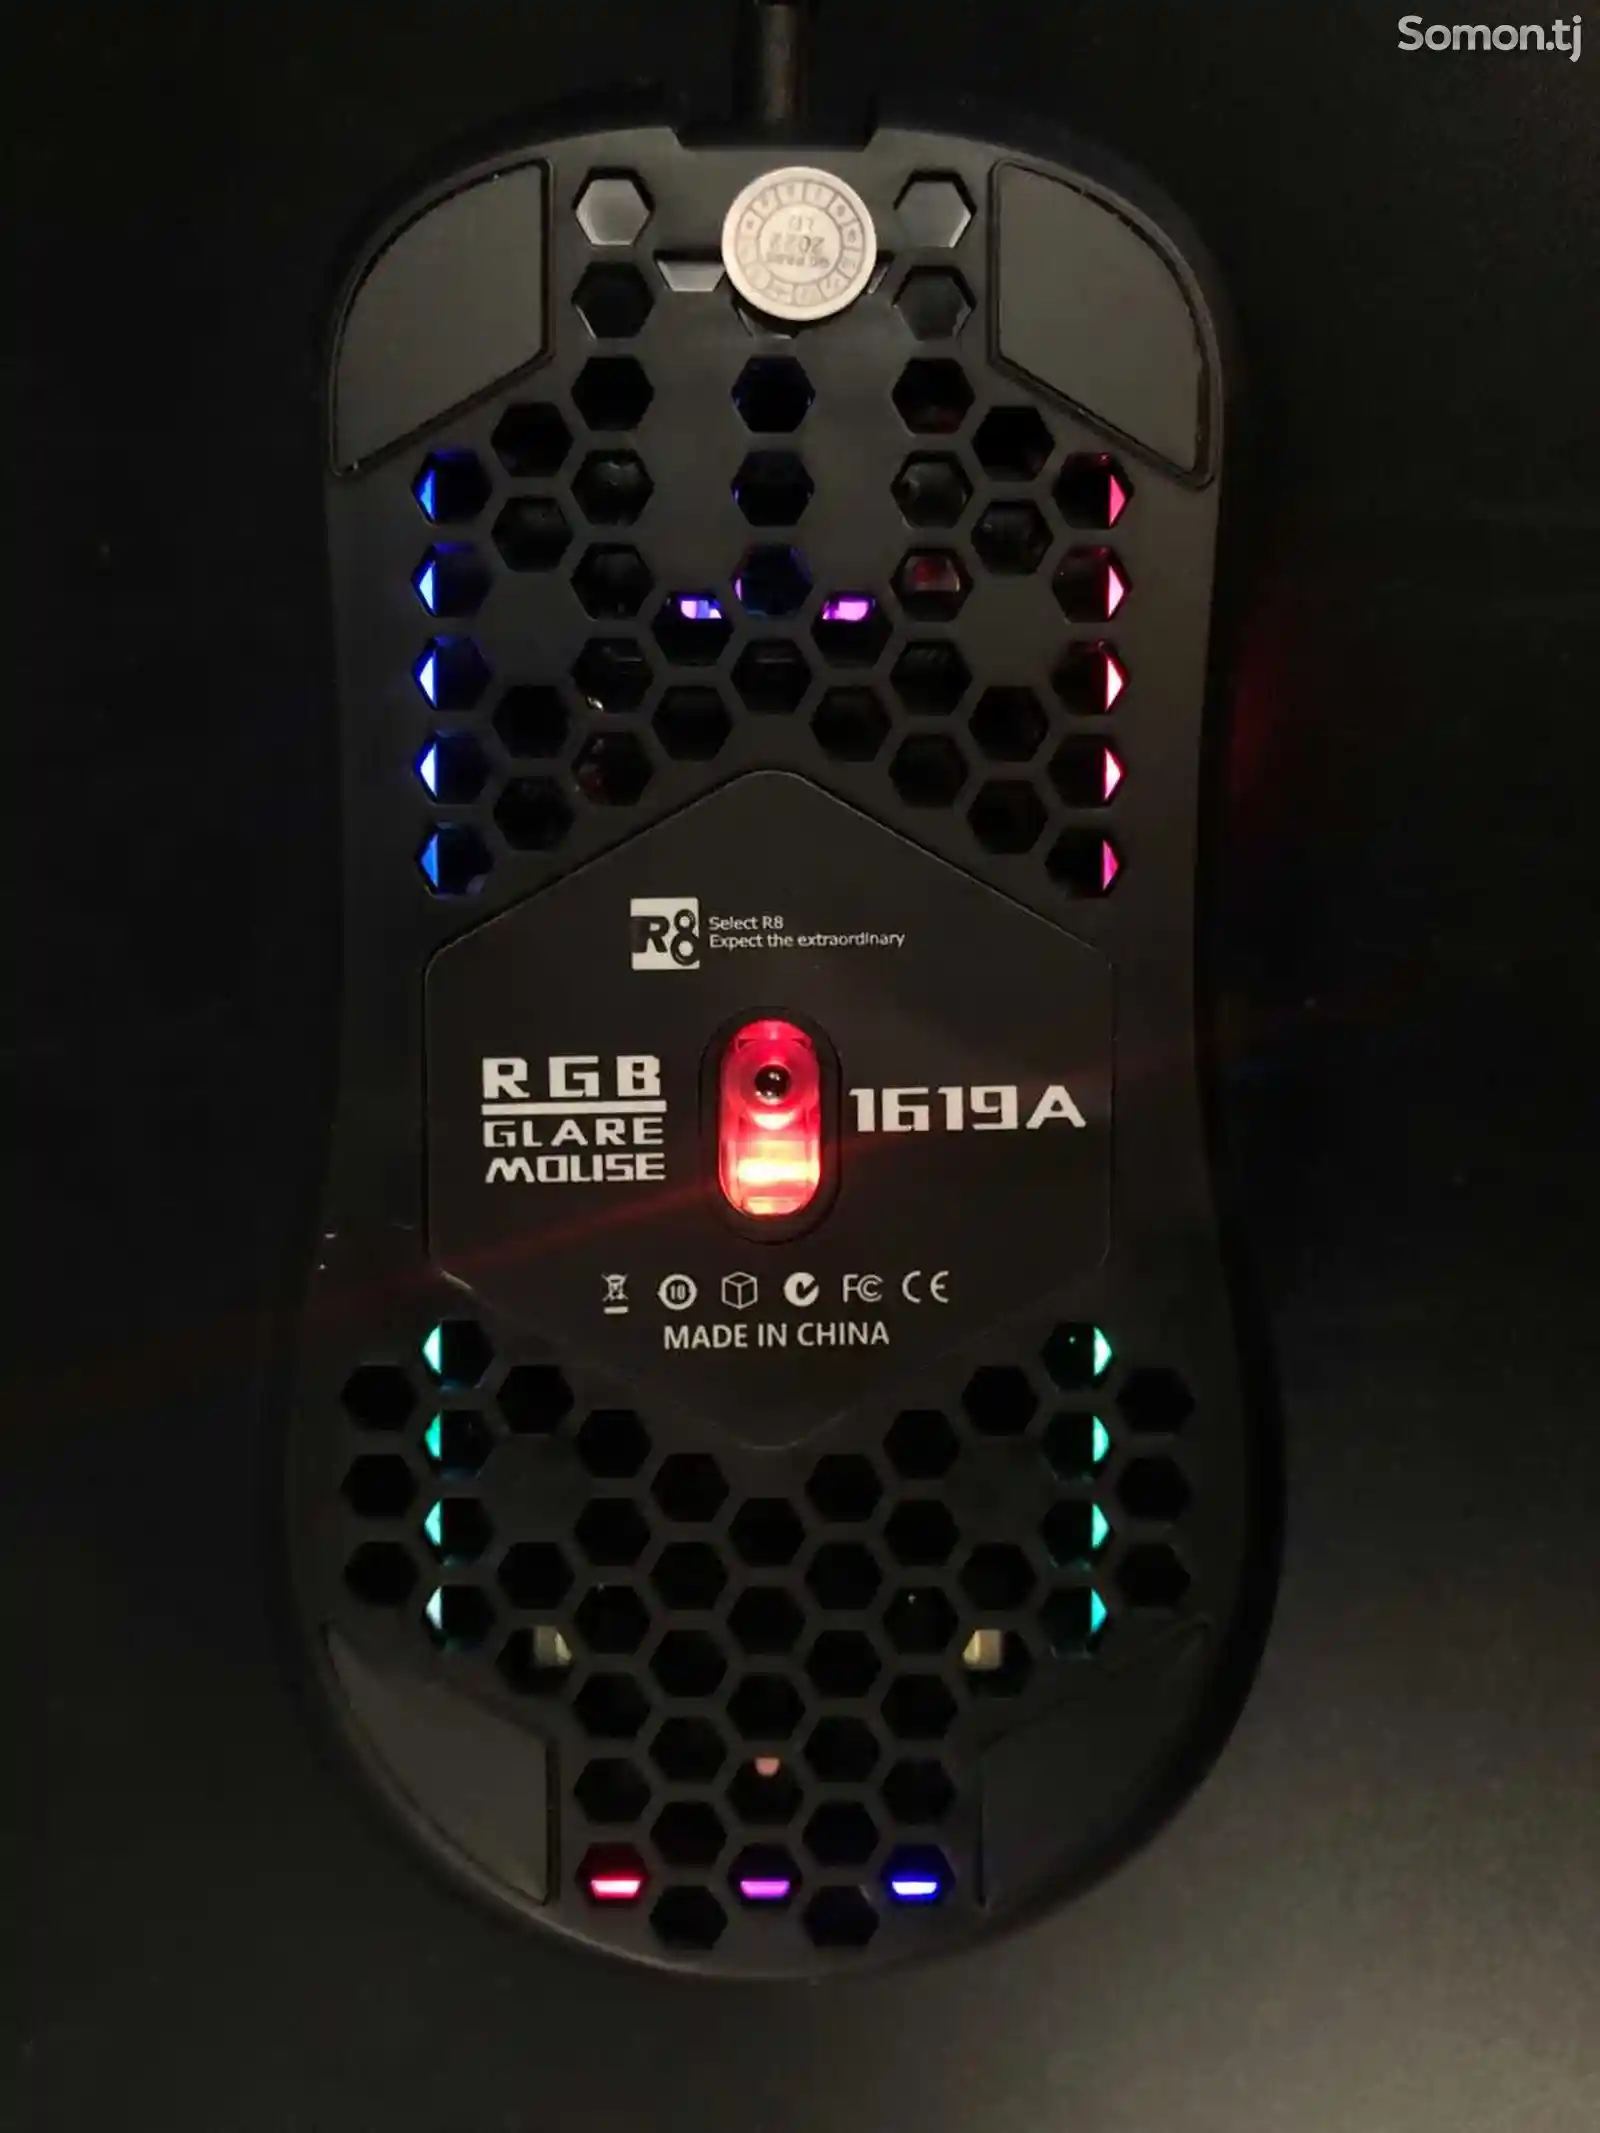 Проводная мышка R8 1619A Glare Mouse с RGB подсветкой-3